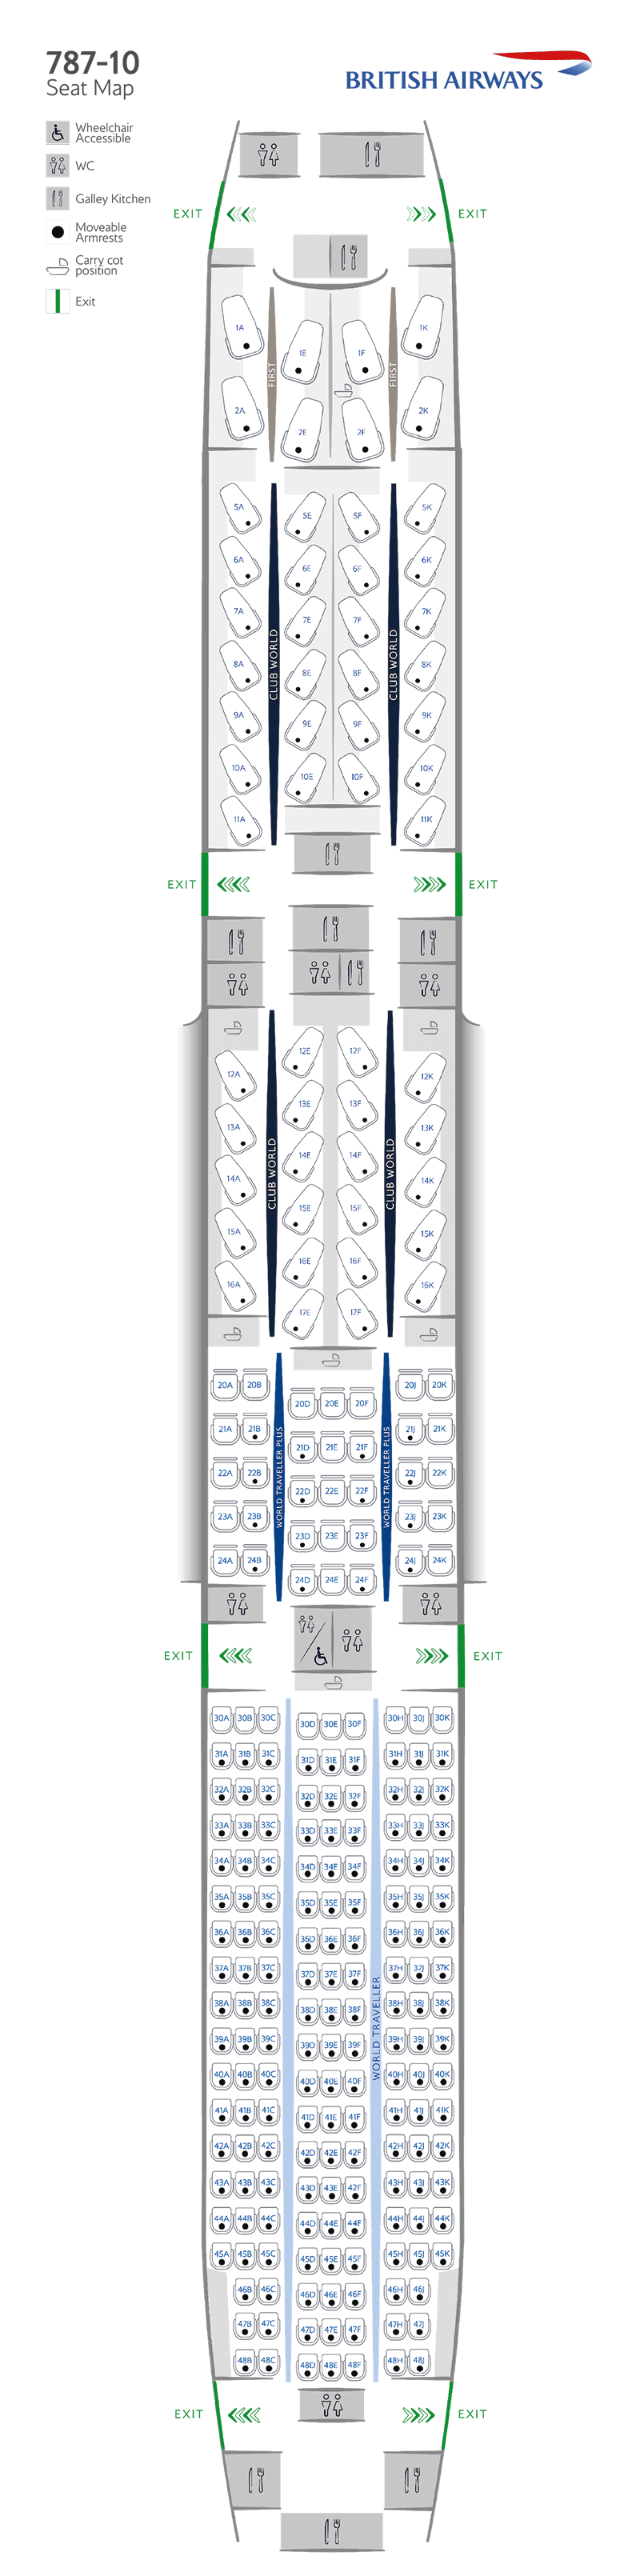 Boeing 787-10 seatmap